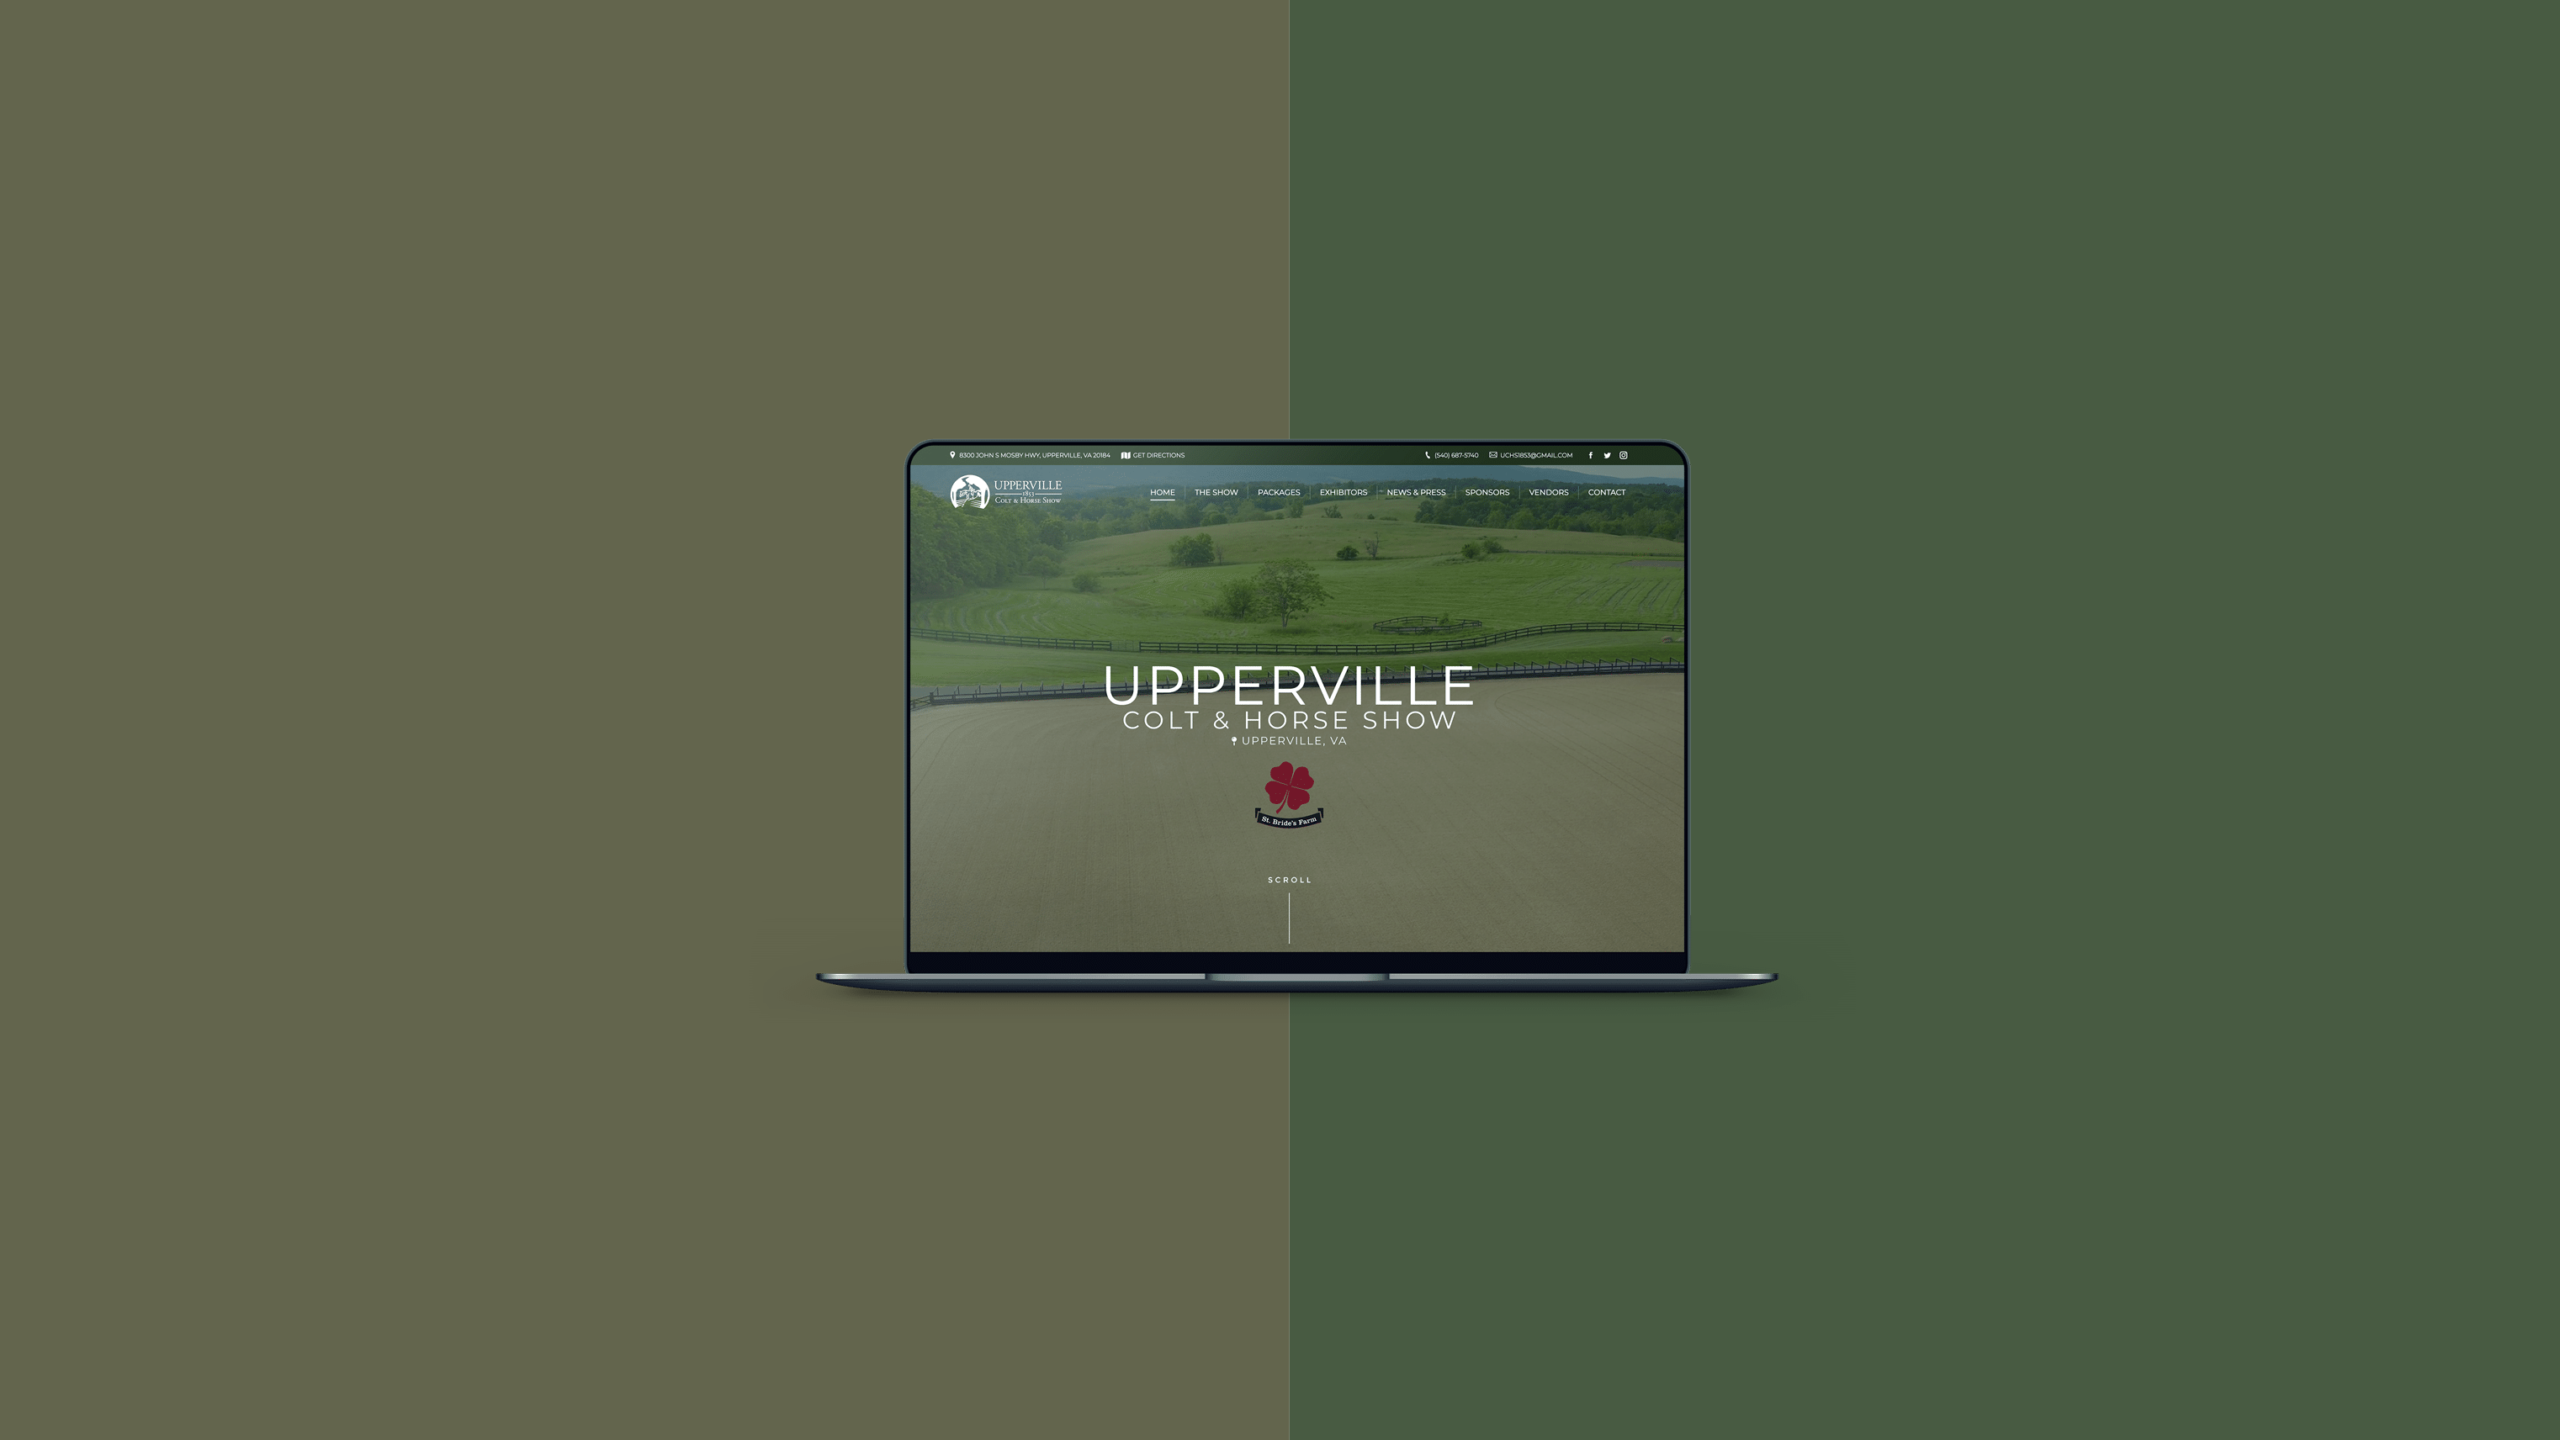 2 upperville horse show website development and design